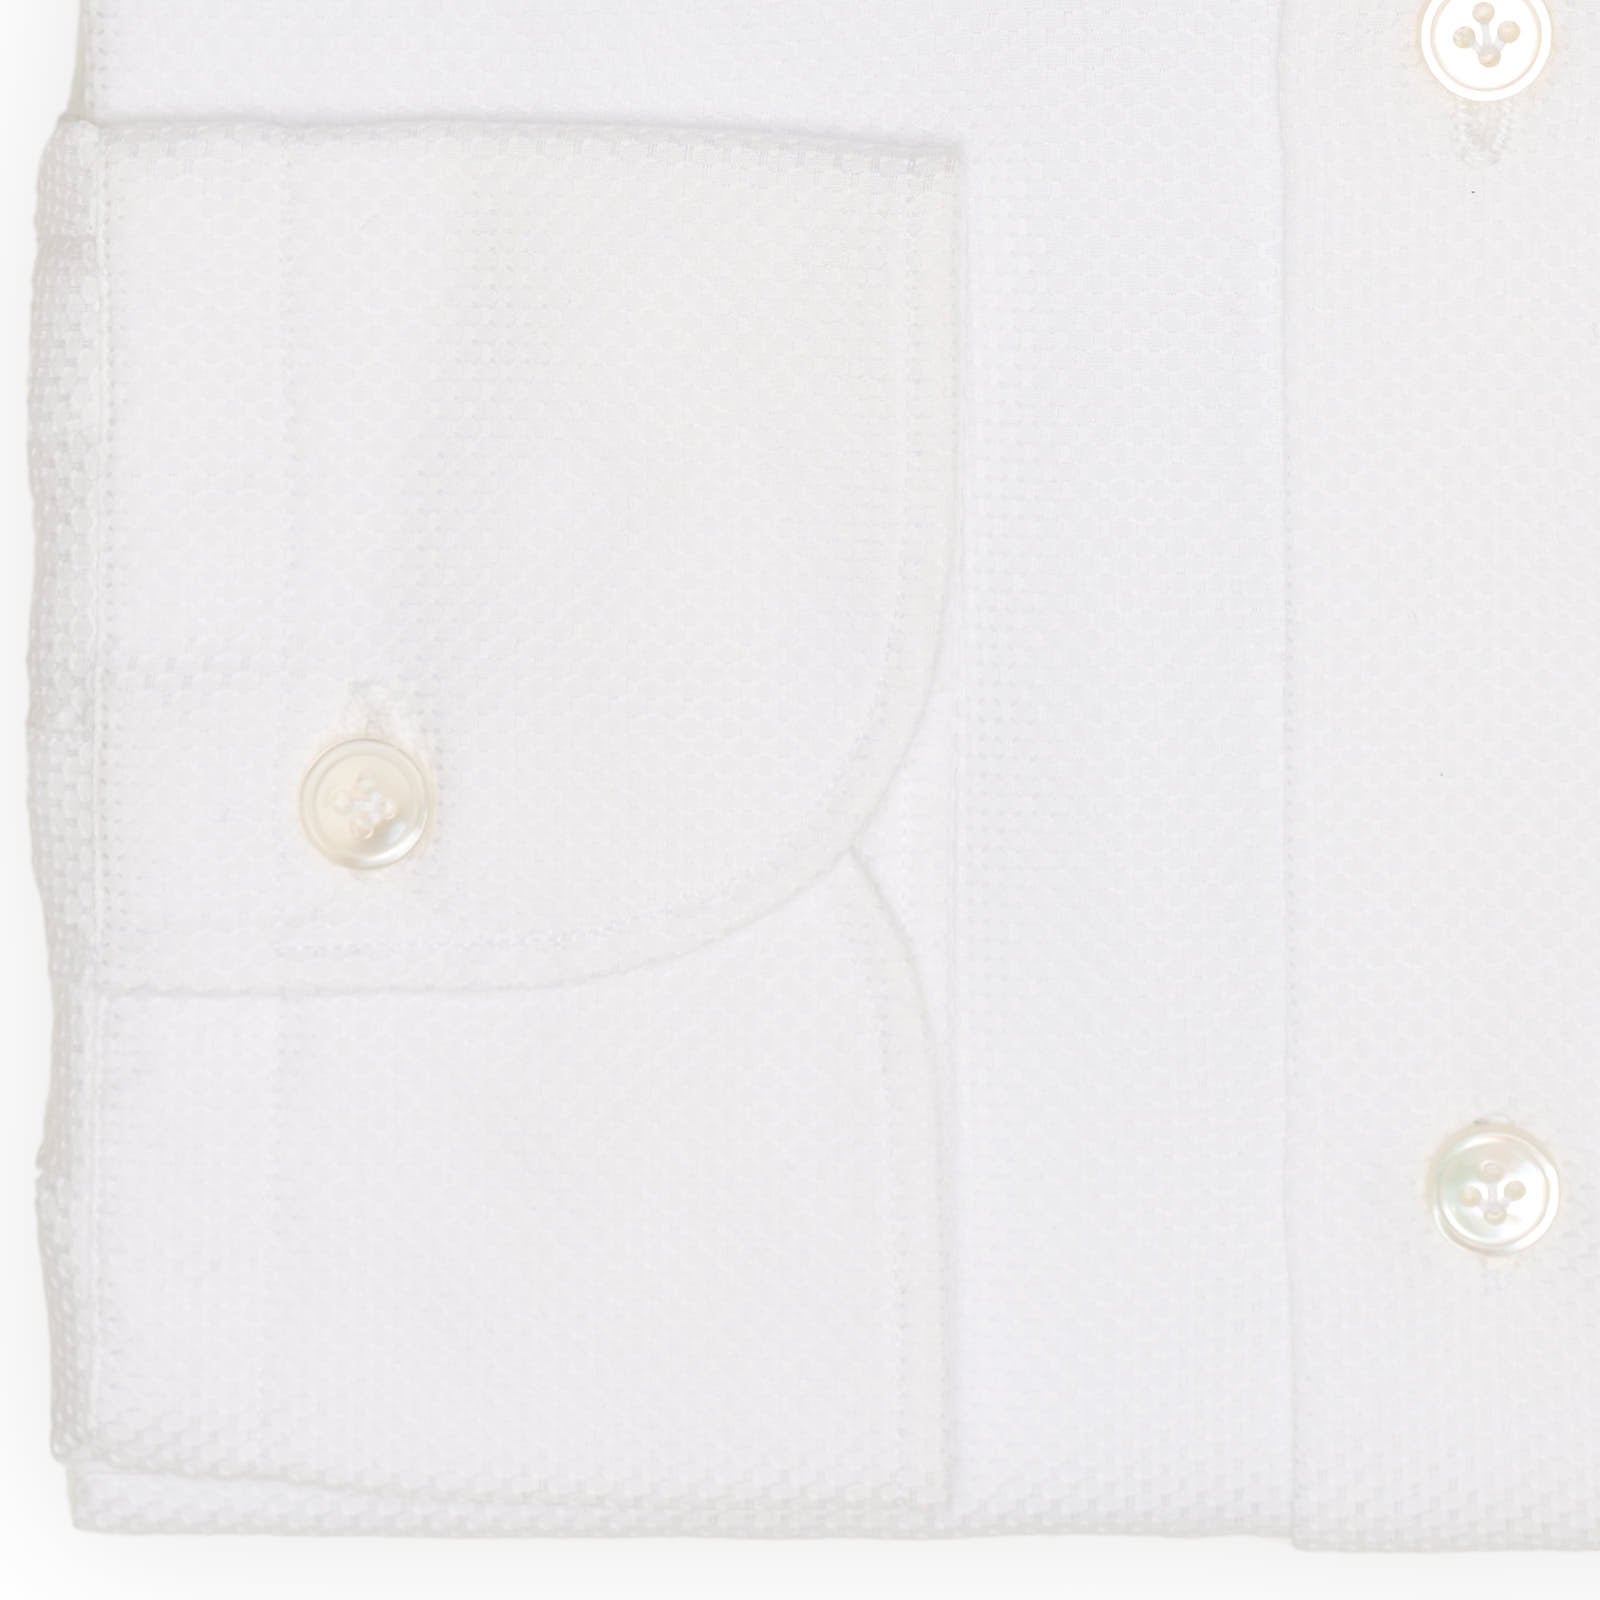 VINCENZO DI RUGGIERO Handmade White Cotton Dress Shirt EU 45 NEW US 18